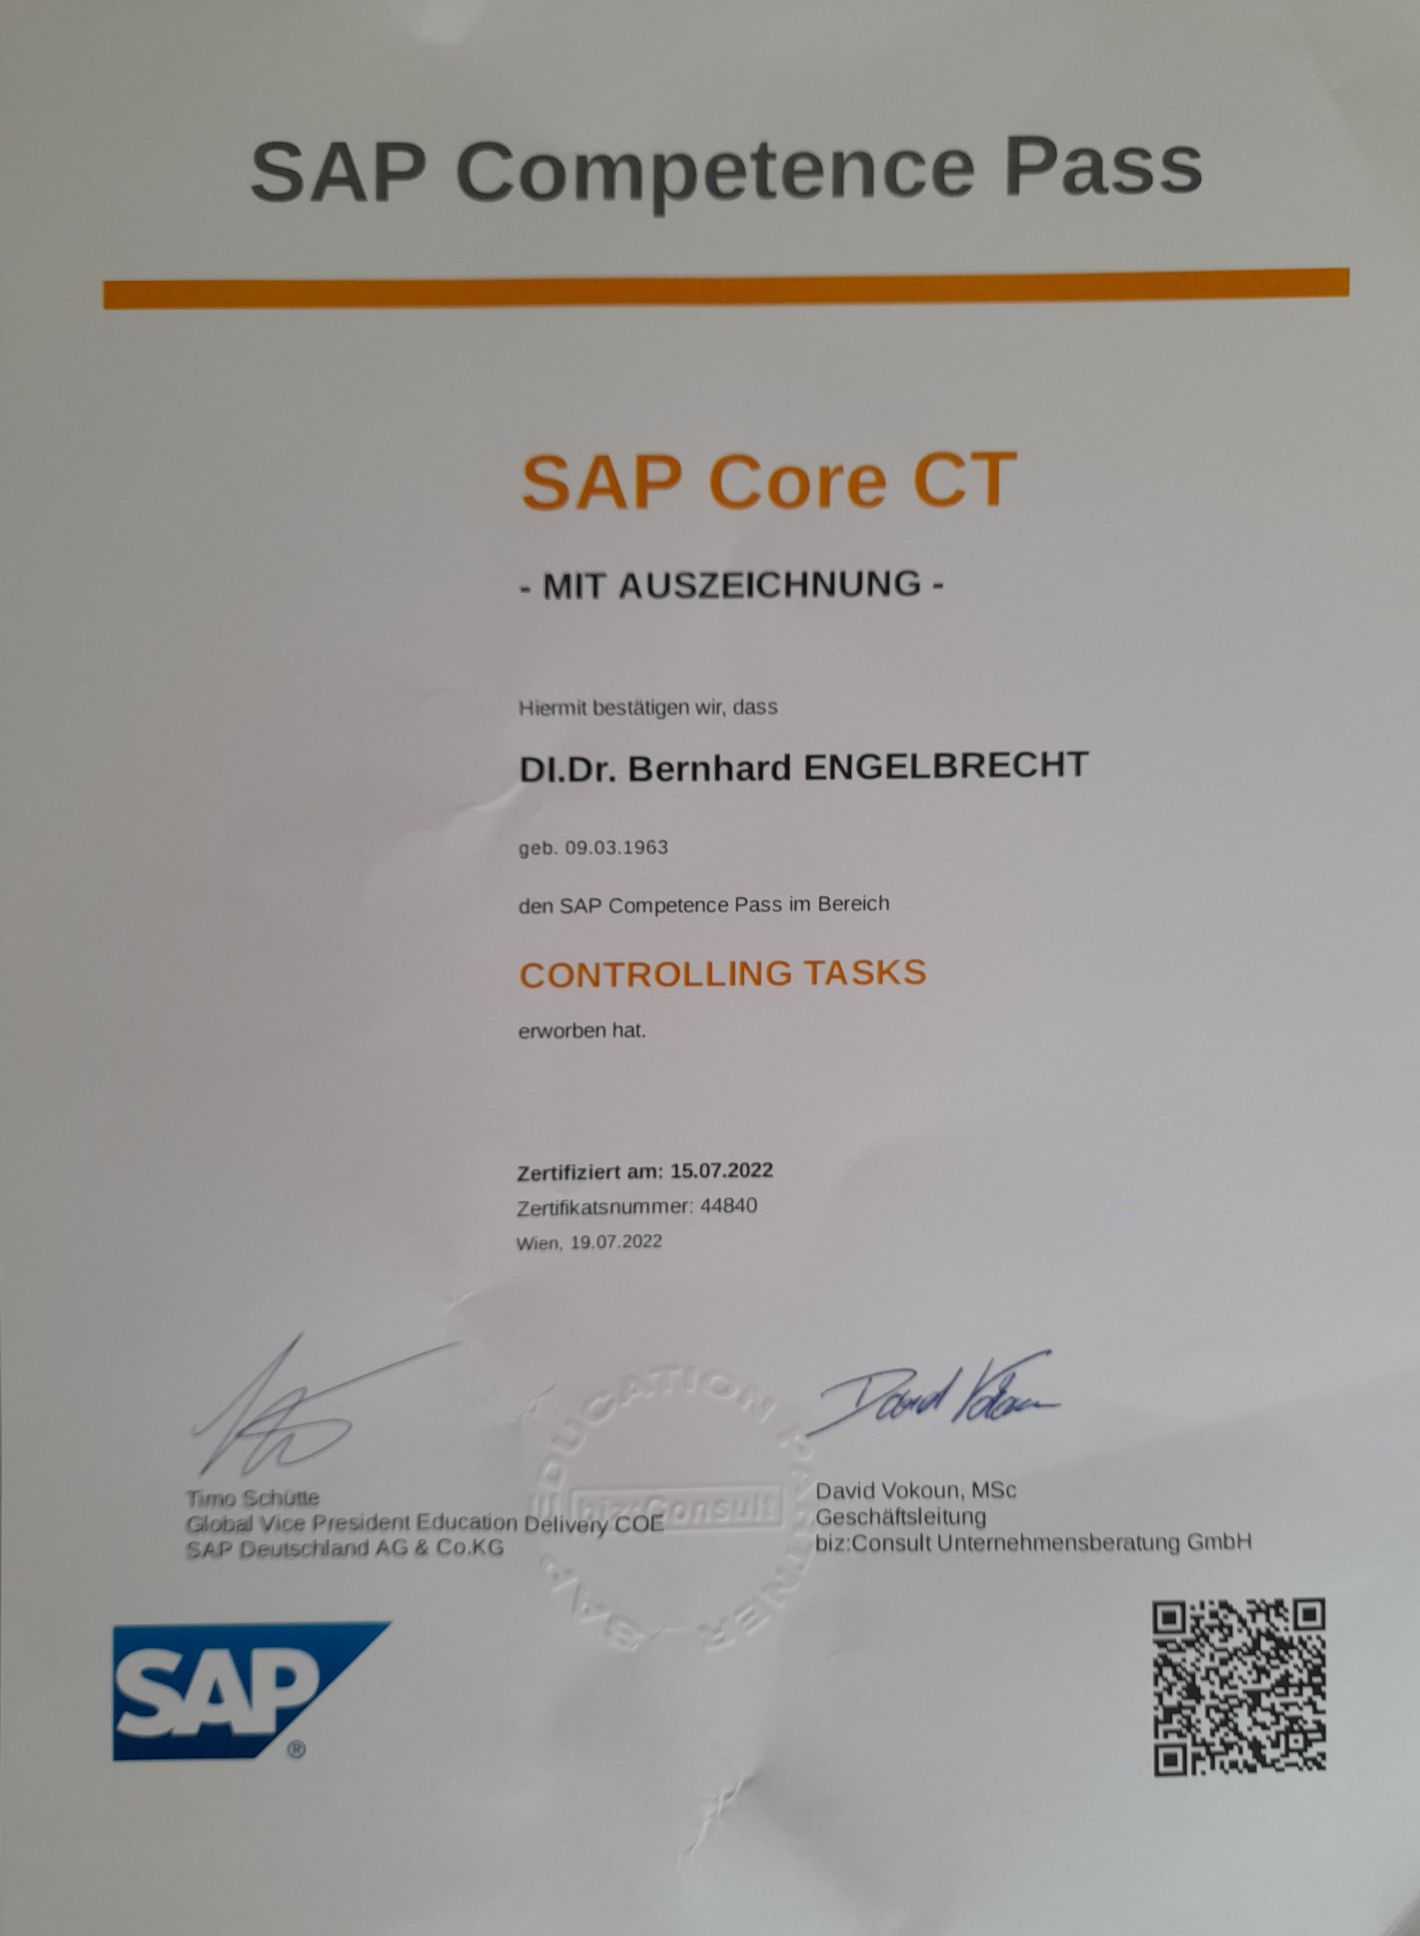 SAP core CT